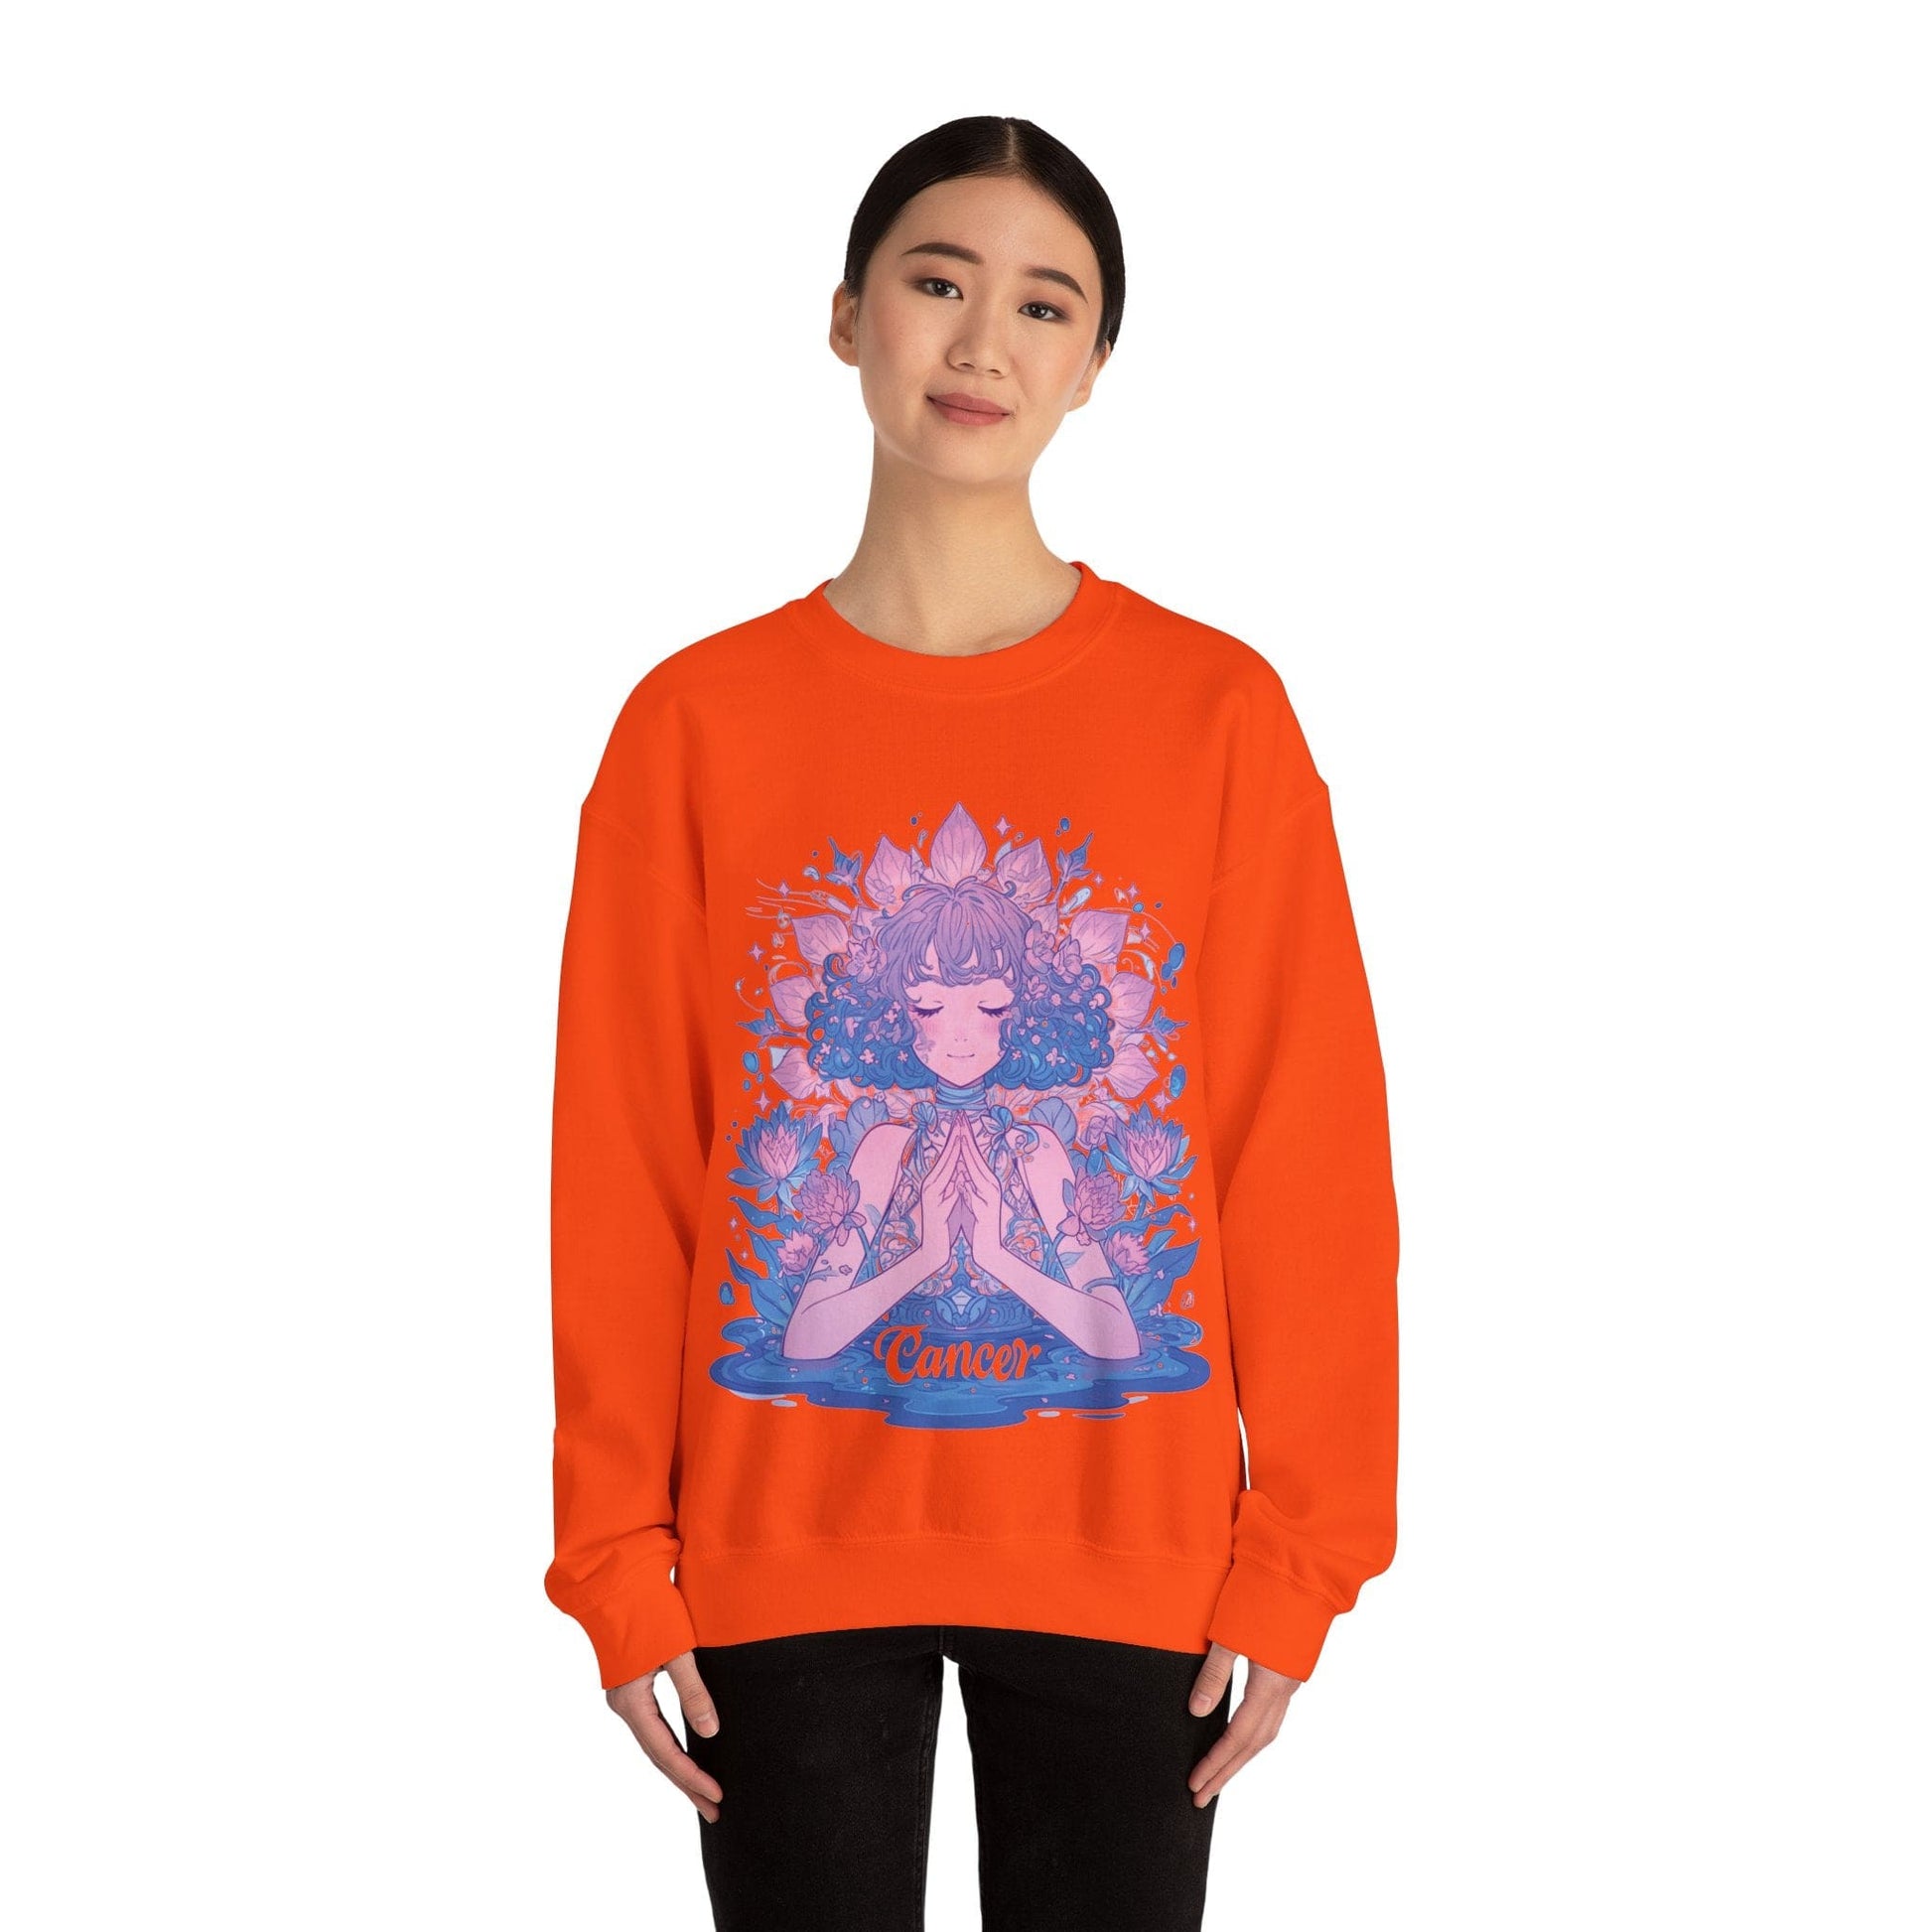 Sweatshirt Lunar Bloom Cancer Sweater: Embrace Tranquility